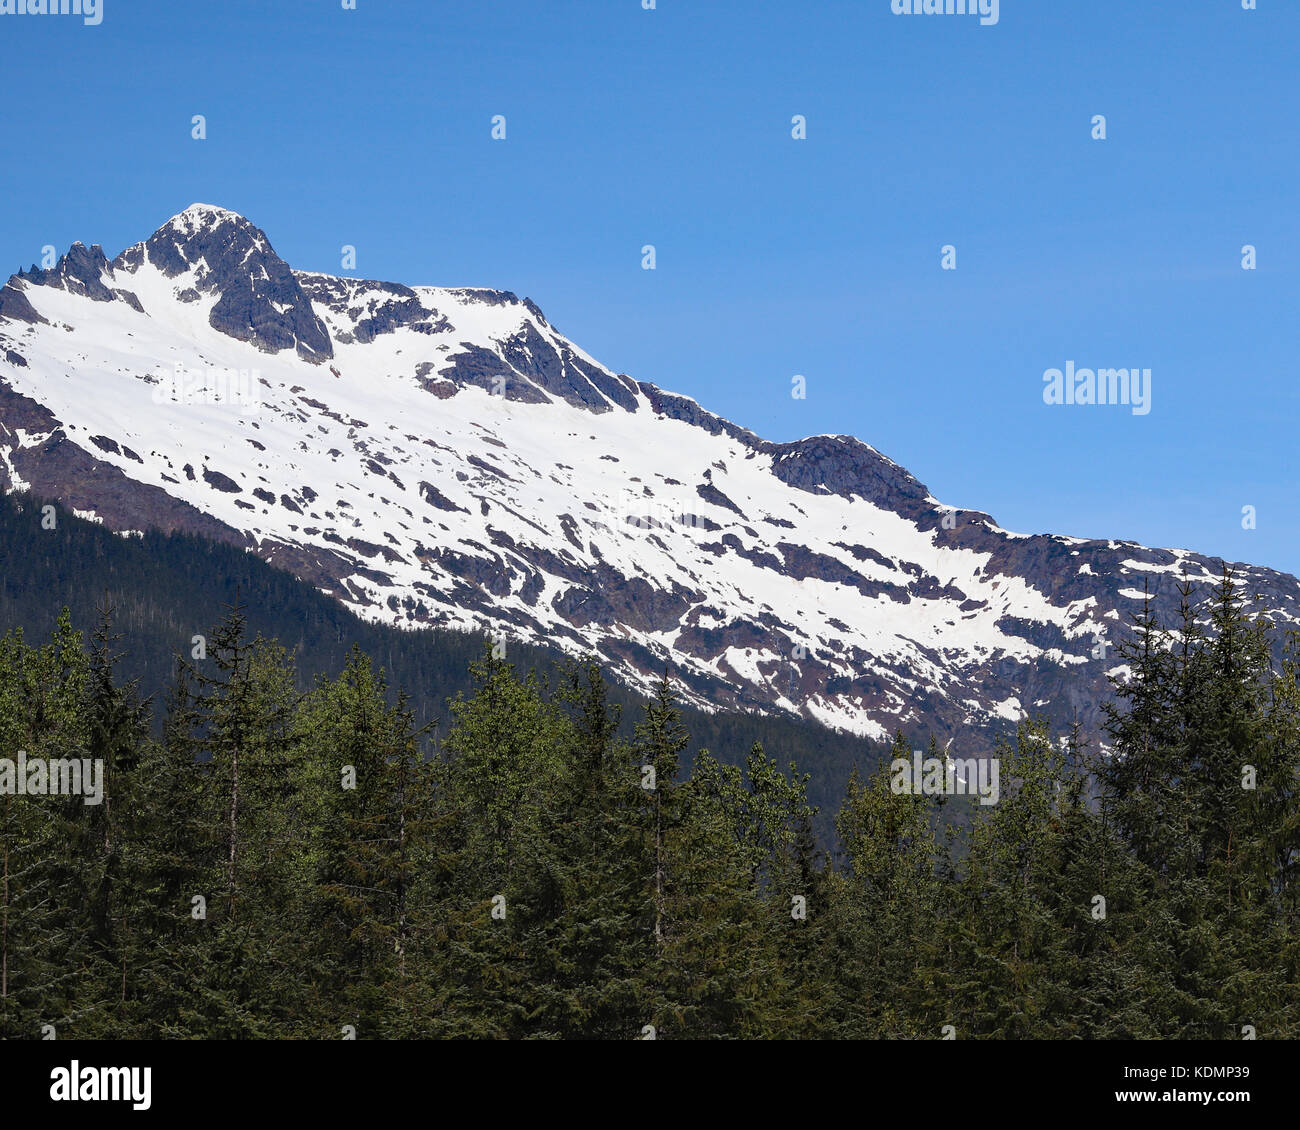 Coperta di neve montagna su torreggianti alberi di pino in Alaska preso dal takshanuk mountain trail in haines, Alaska Foto Stock